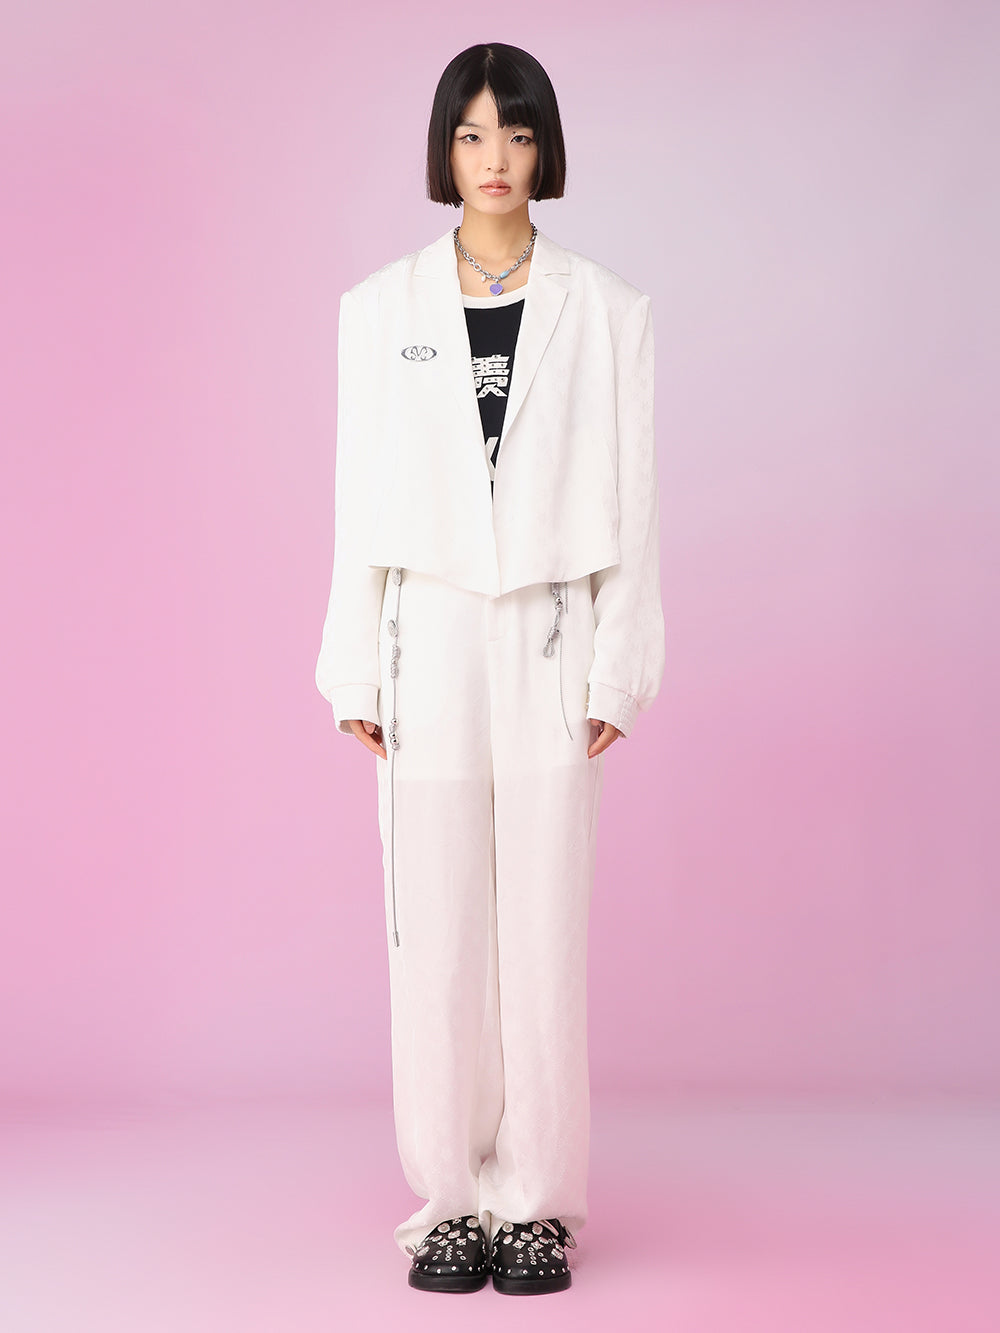 MUKZIN  White Simple Temperament Charming All-Match Suit